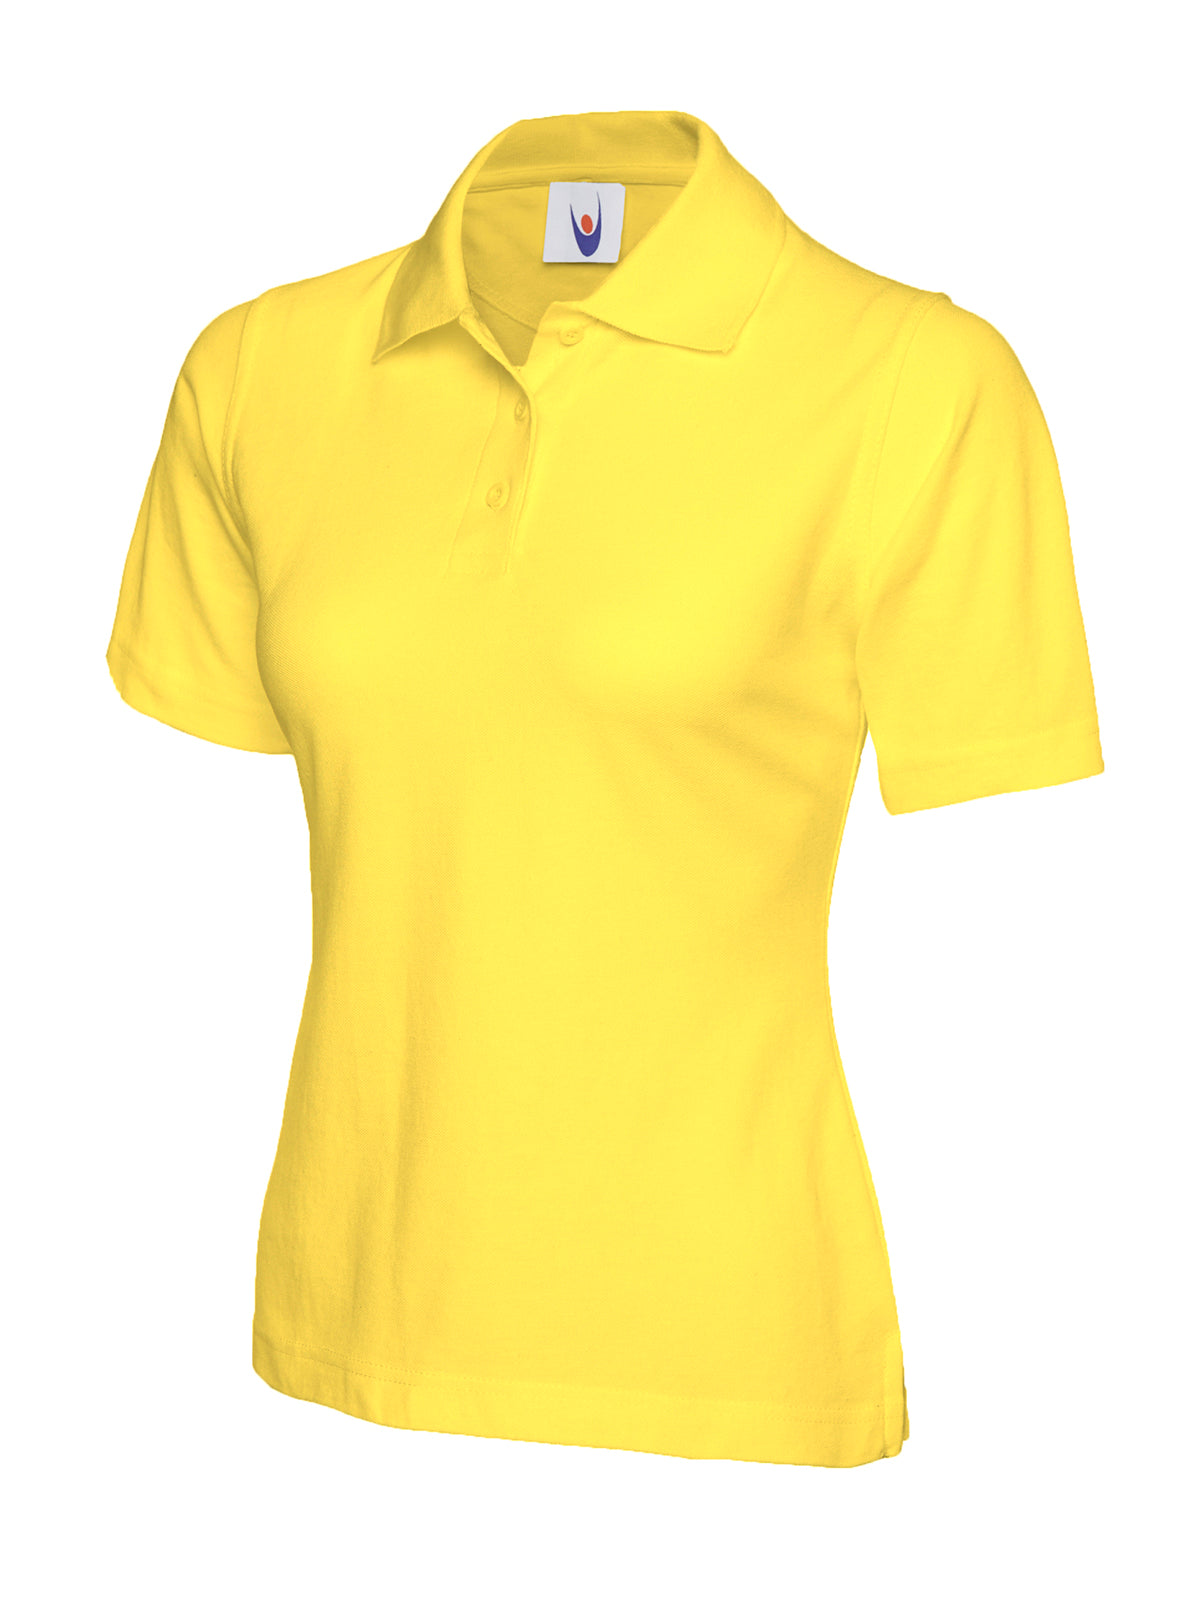 Uneek Ladies Classic Poloshirt - Yellow